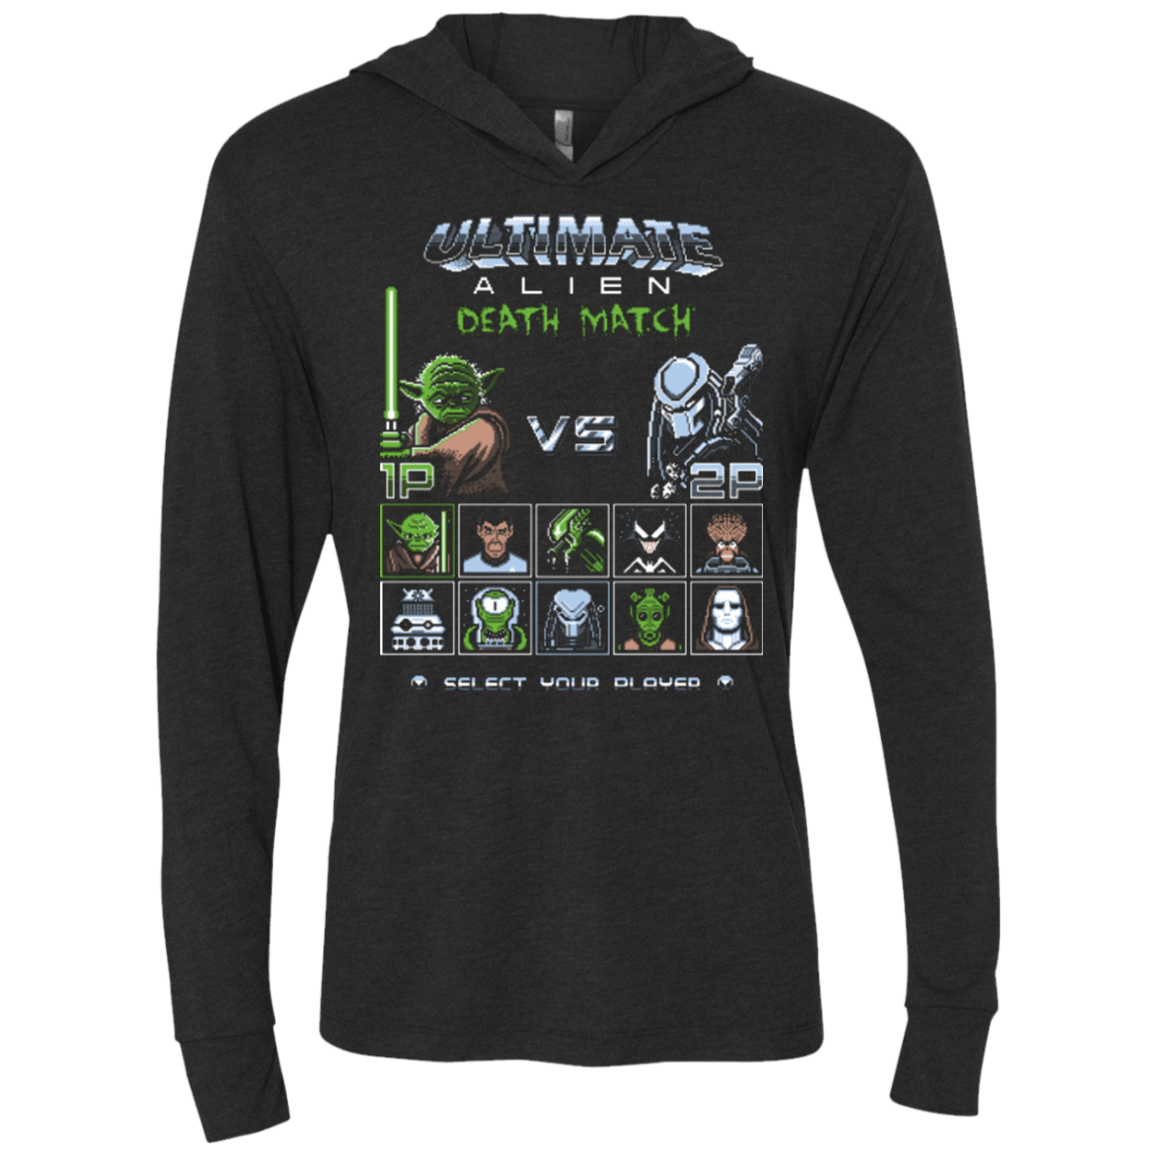 T-Shirts Vintage Black / X-Small Ultimate alien deathmatch Triblend Long Sleeve Hoodie Tee